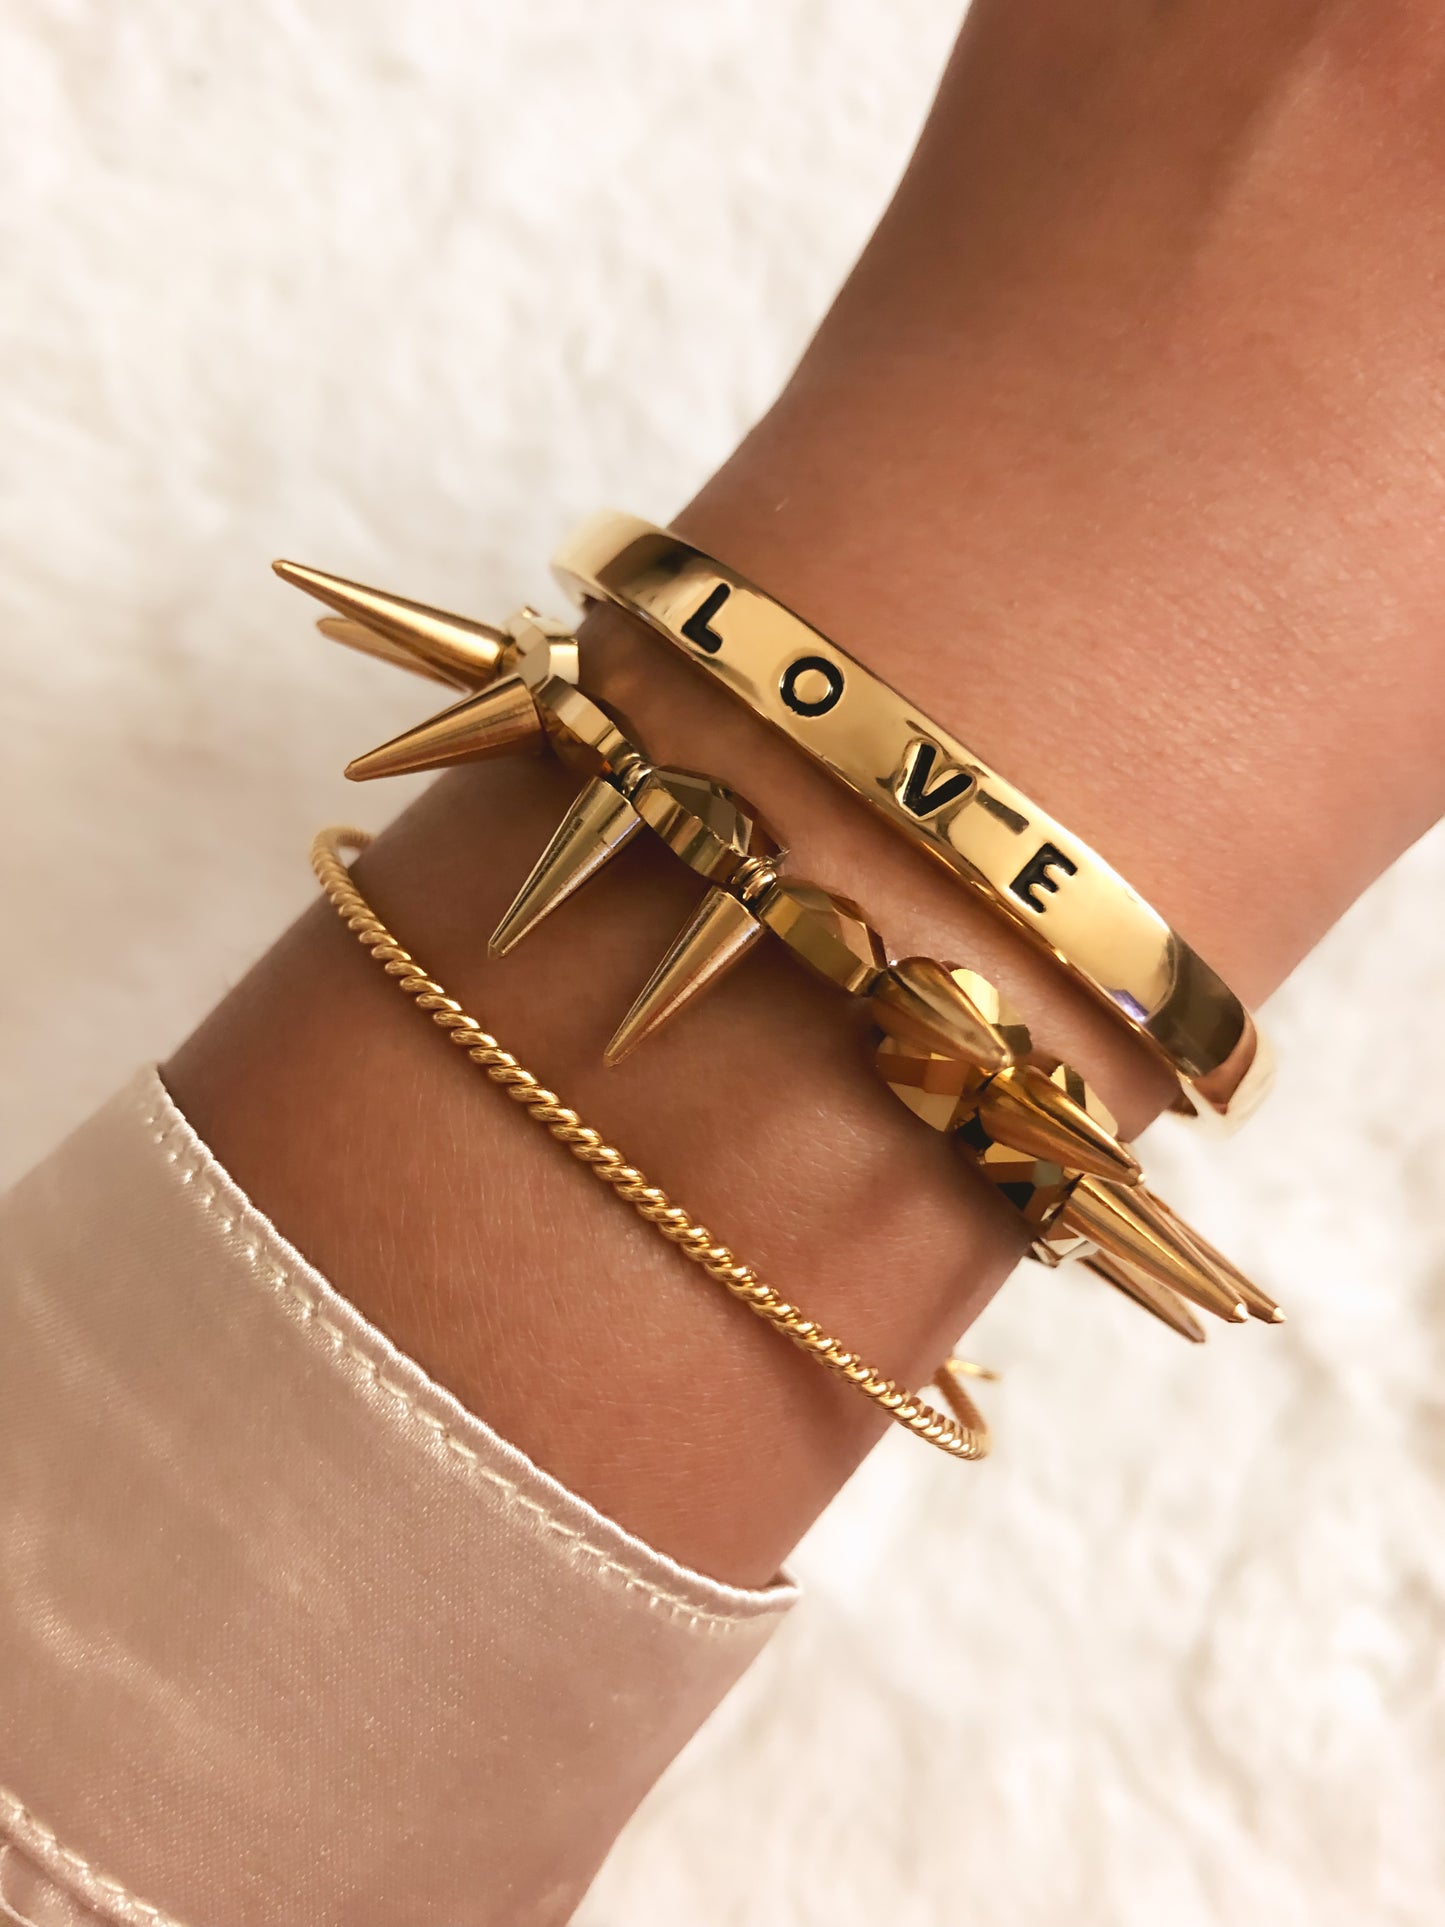 Love Collection - Gold Bracelet